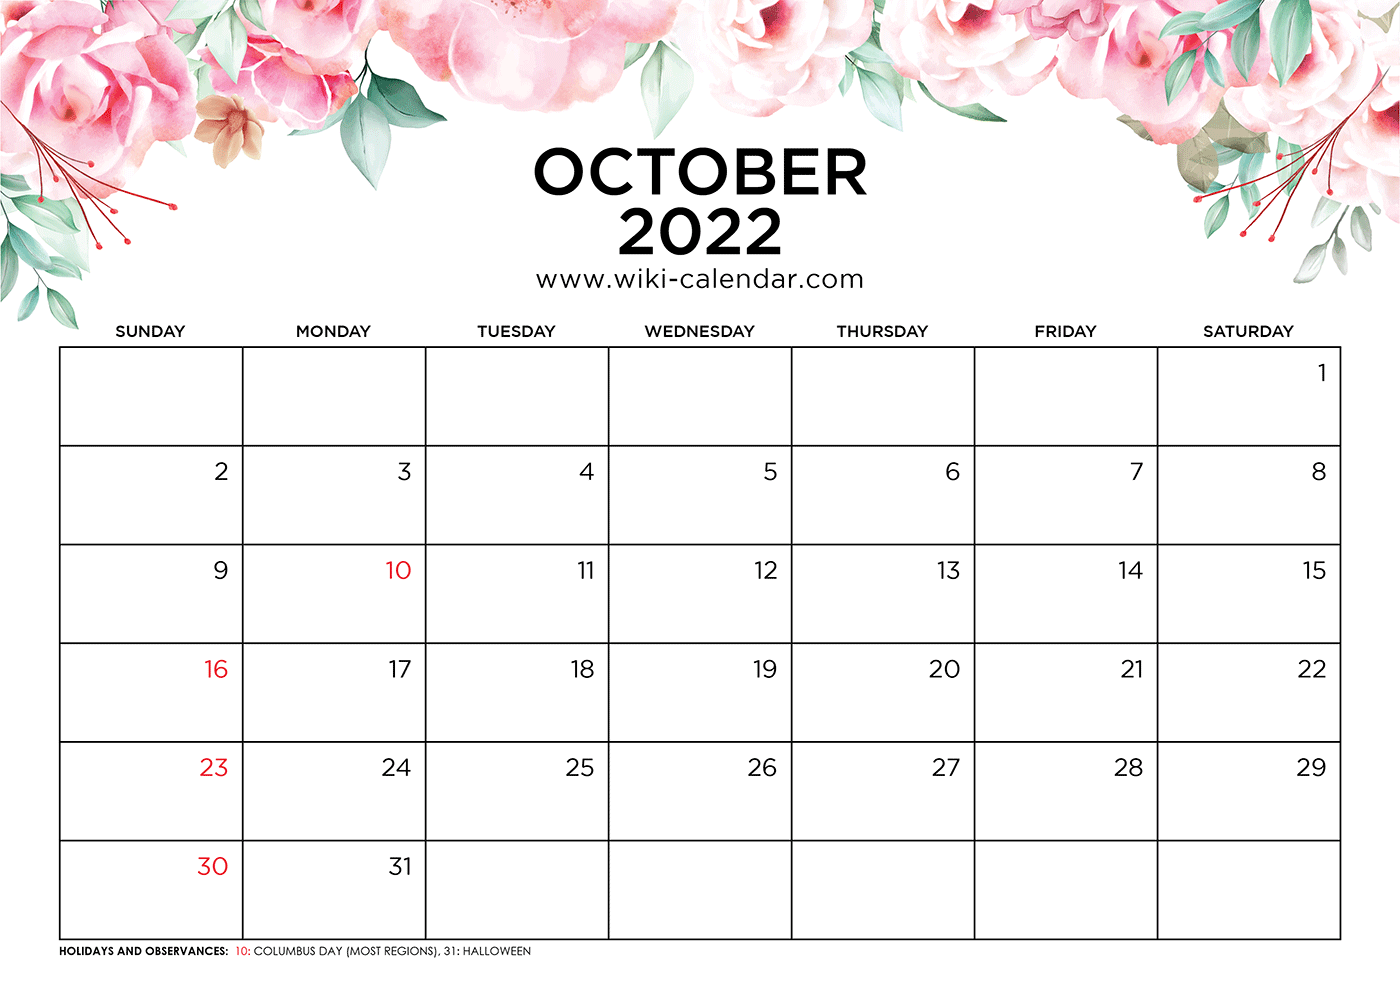 October Monthly Calendar 2022 Free Printable October 2022 Calendars - Wiki Calendar